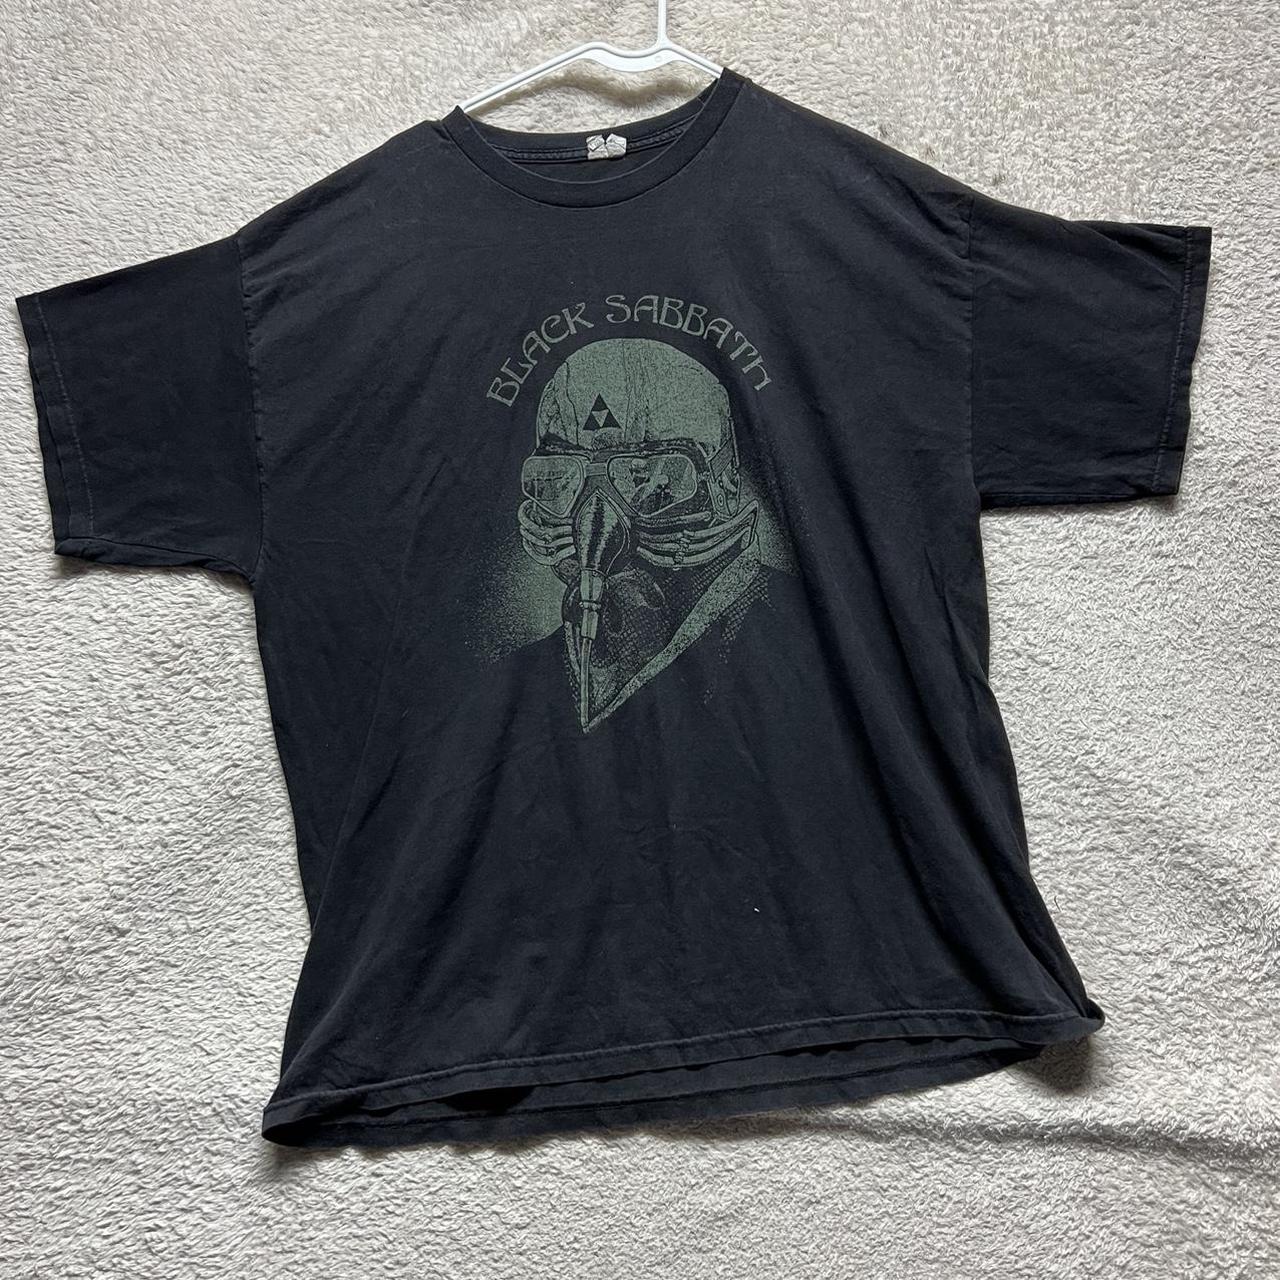 2013 Black Sabbath tour t shirt size XXL - Depop